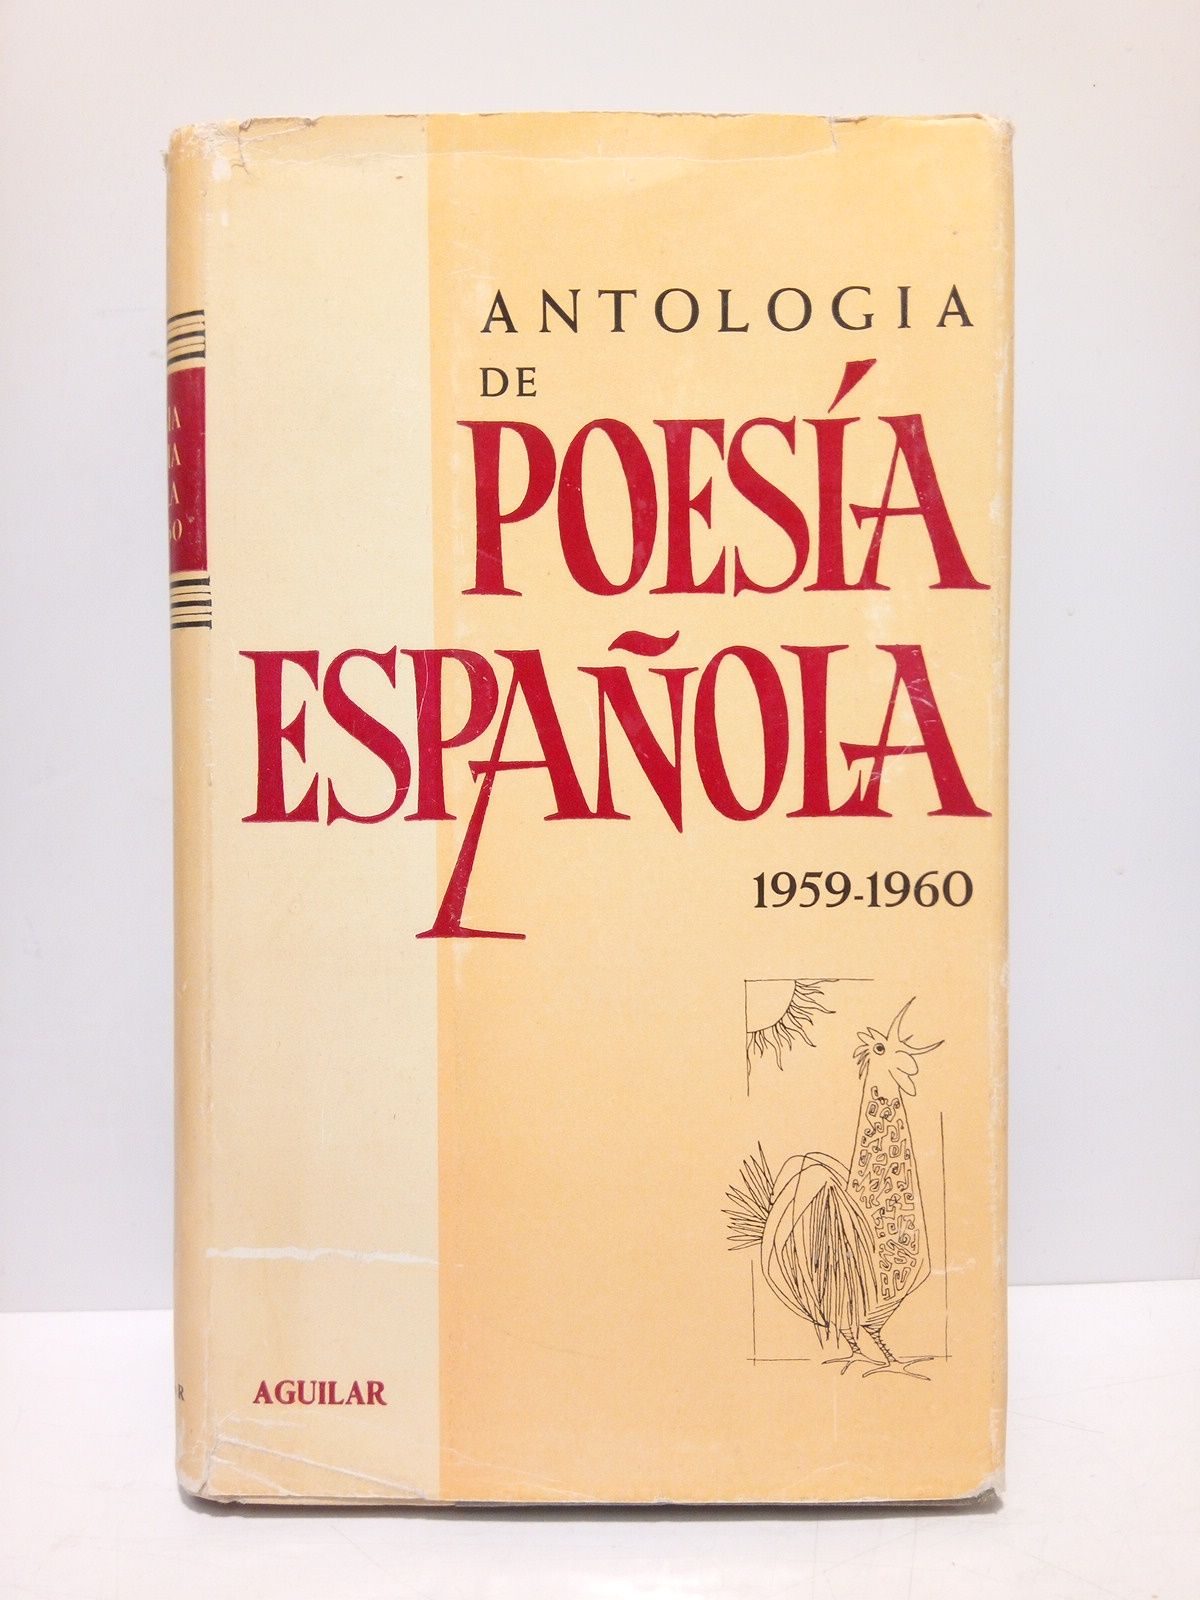 ANTOLOGIA...(Recopila, Jimnez Martos) - Antologa de poesa espaola 1959-1960 /  Recopilada por Jimnez Martos